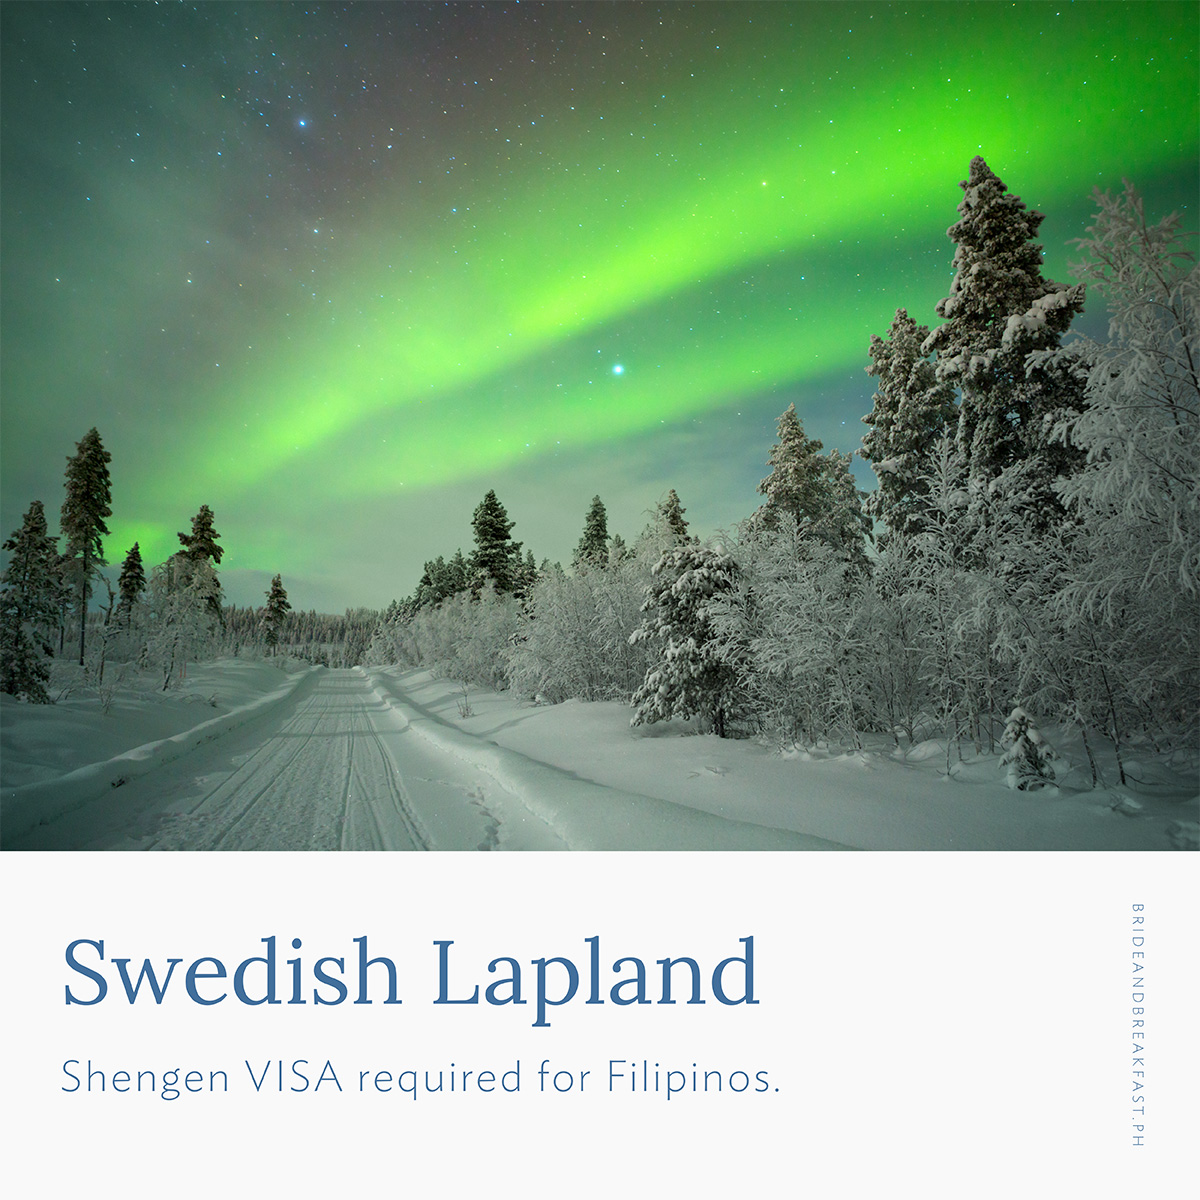 SWEDISH LAPLAND Visa Requirement: Shengen Visa required for Filipinos.